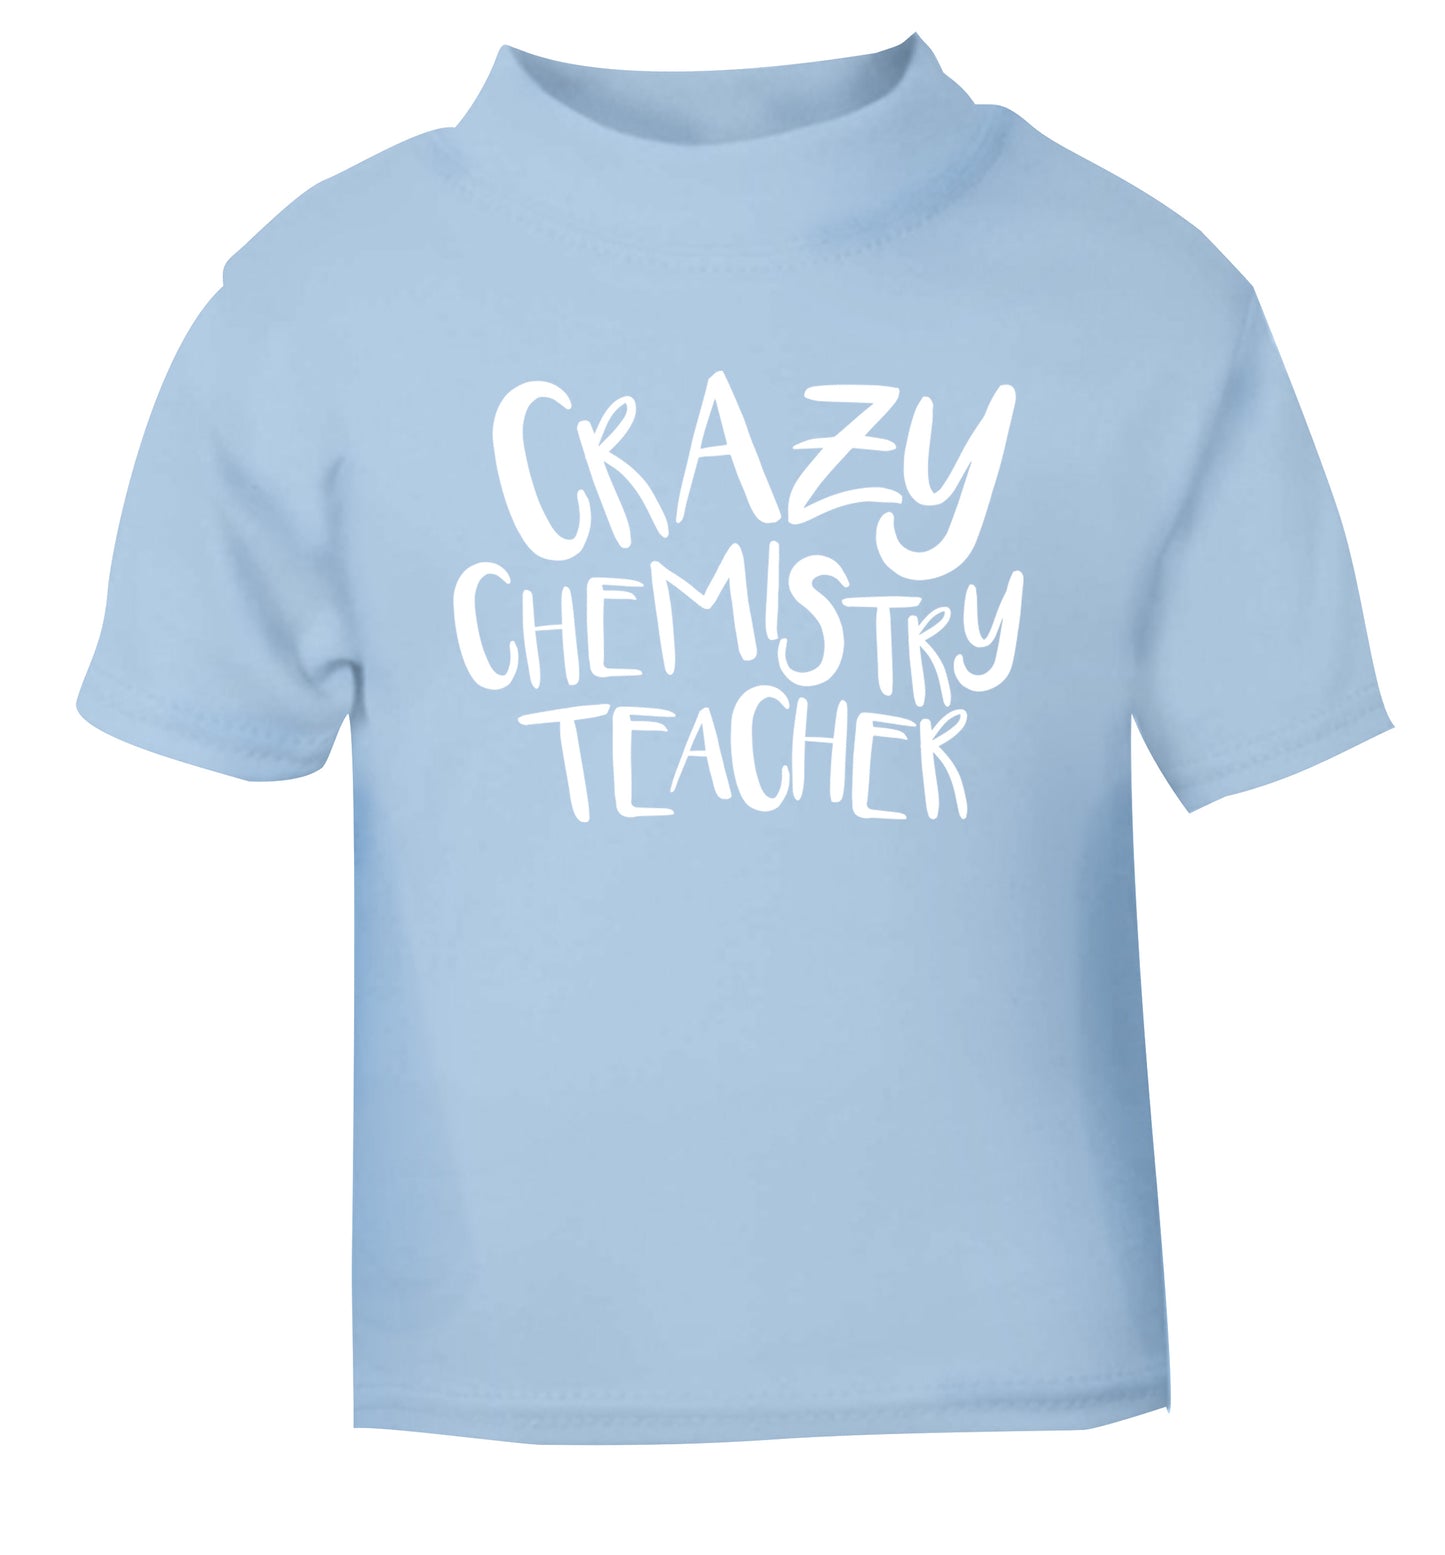 Crazy chemistry teacher light blue Baby Toddler Tshirt 2 Years